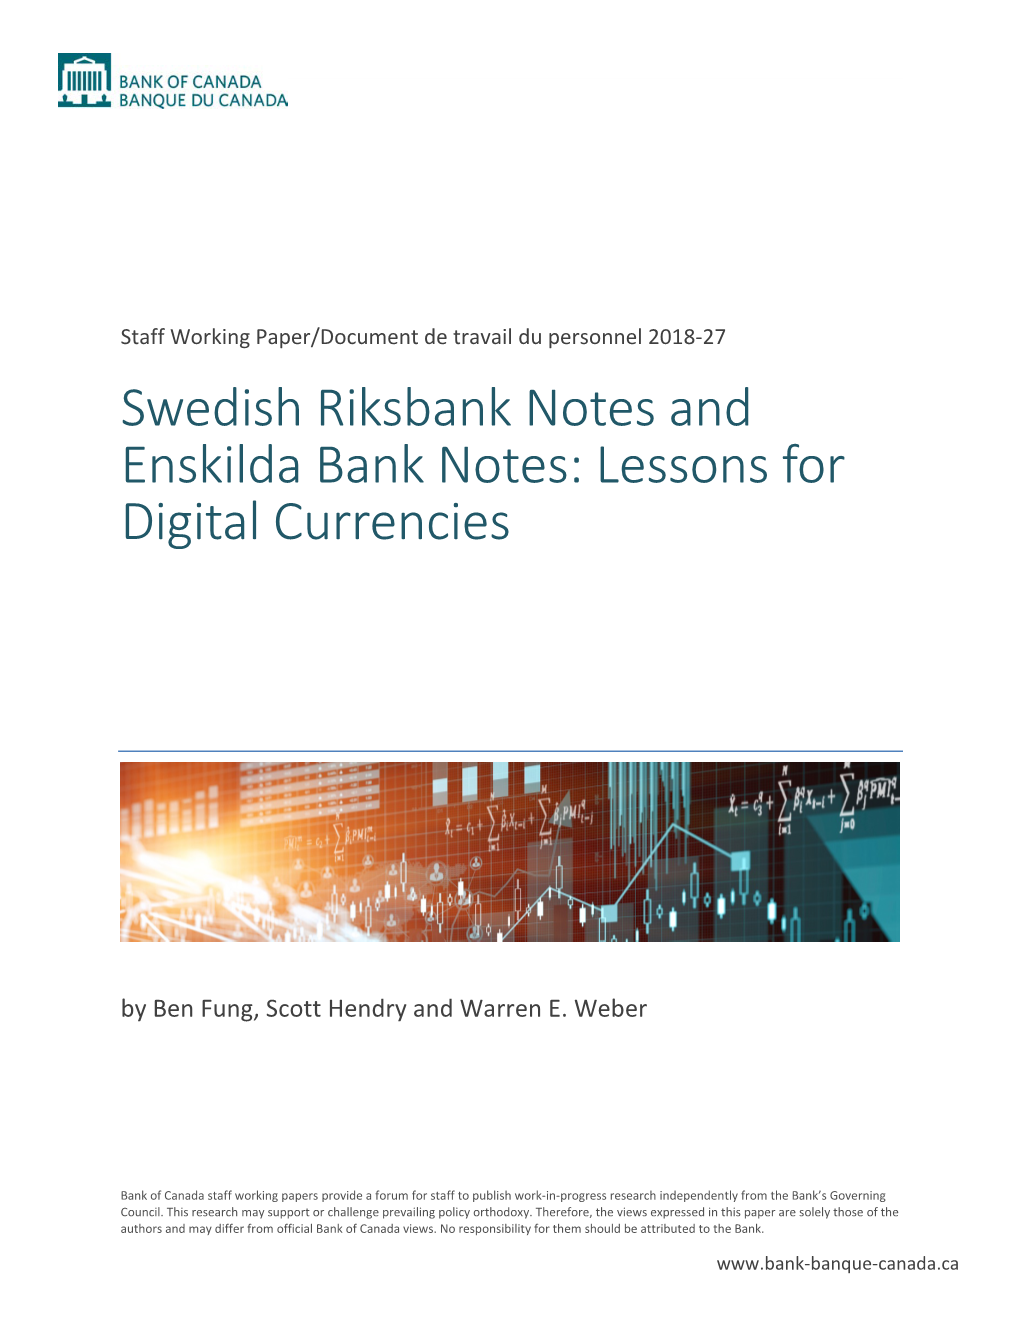 Swedish Riksbank Notes and Enskilda Bank Notes: Lessons for Digital Currencies